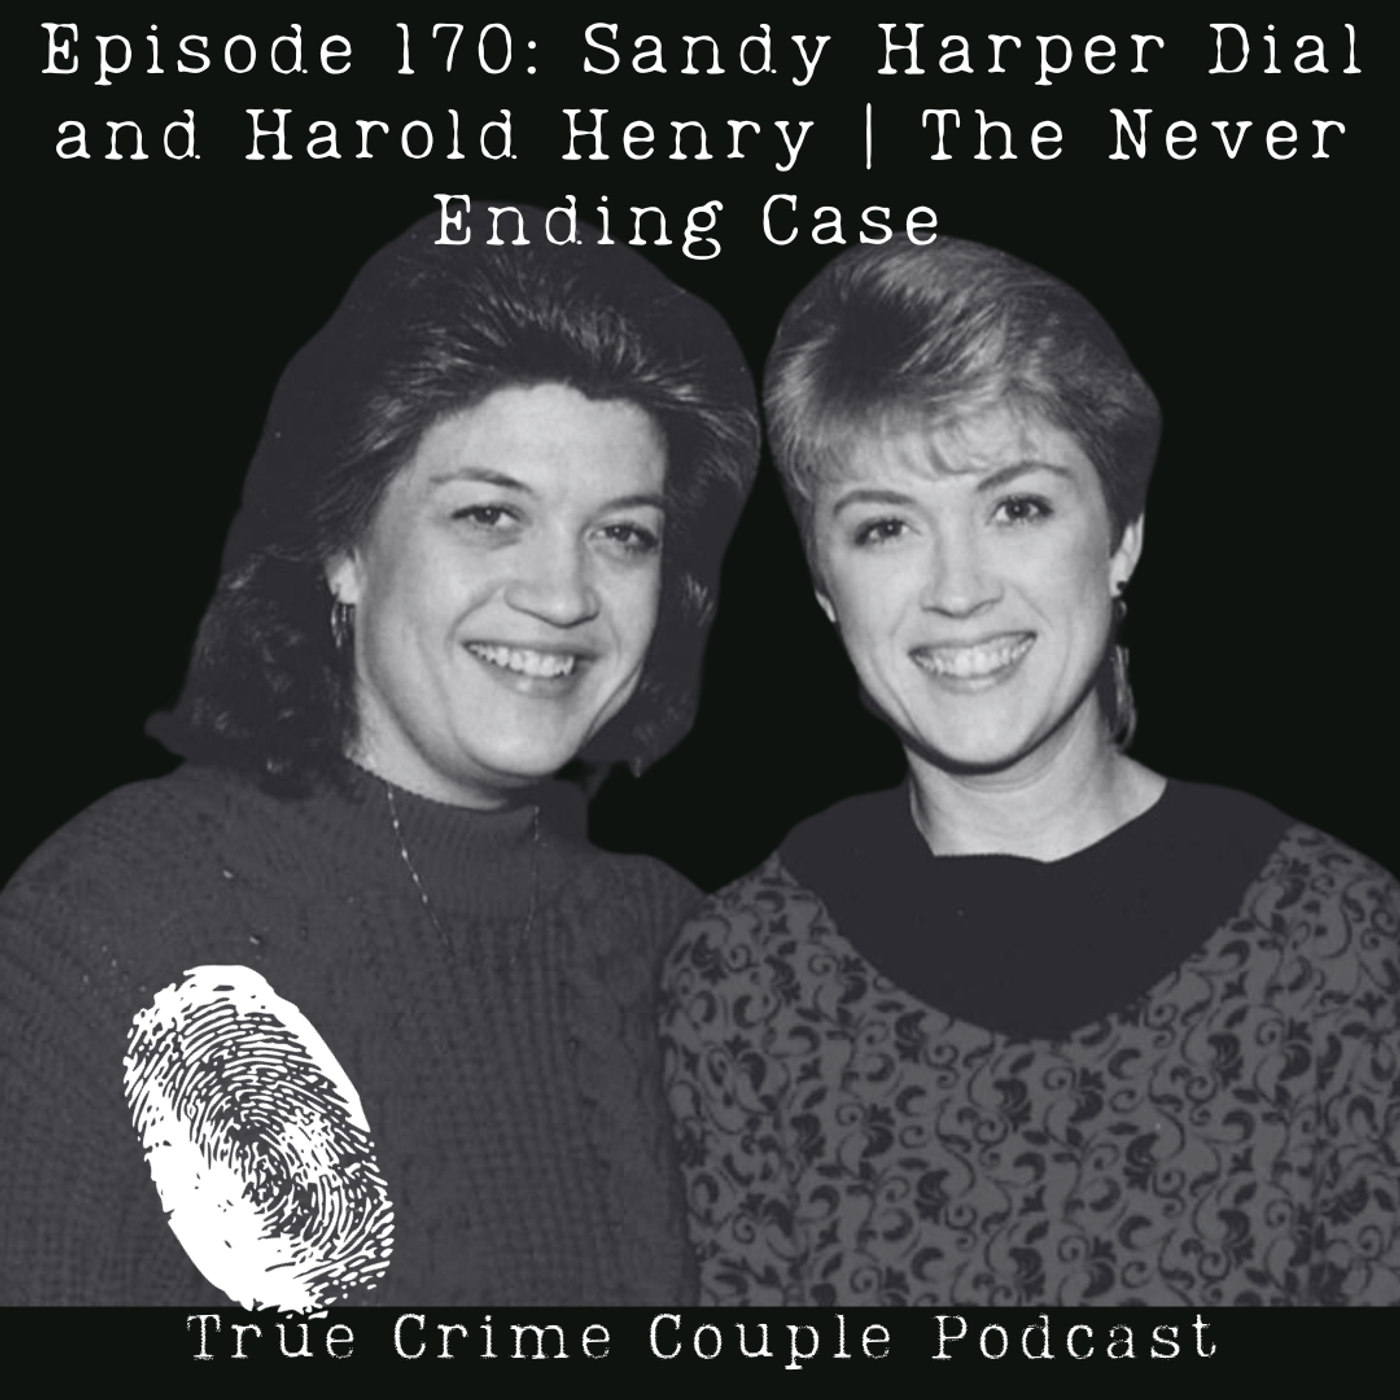 Episode 170: Sandy Harper Dial and Harold Henry | The Never Ending Case